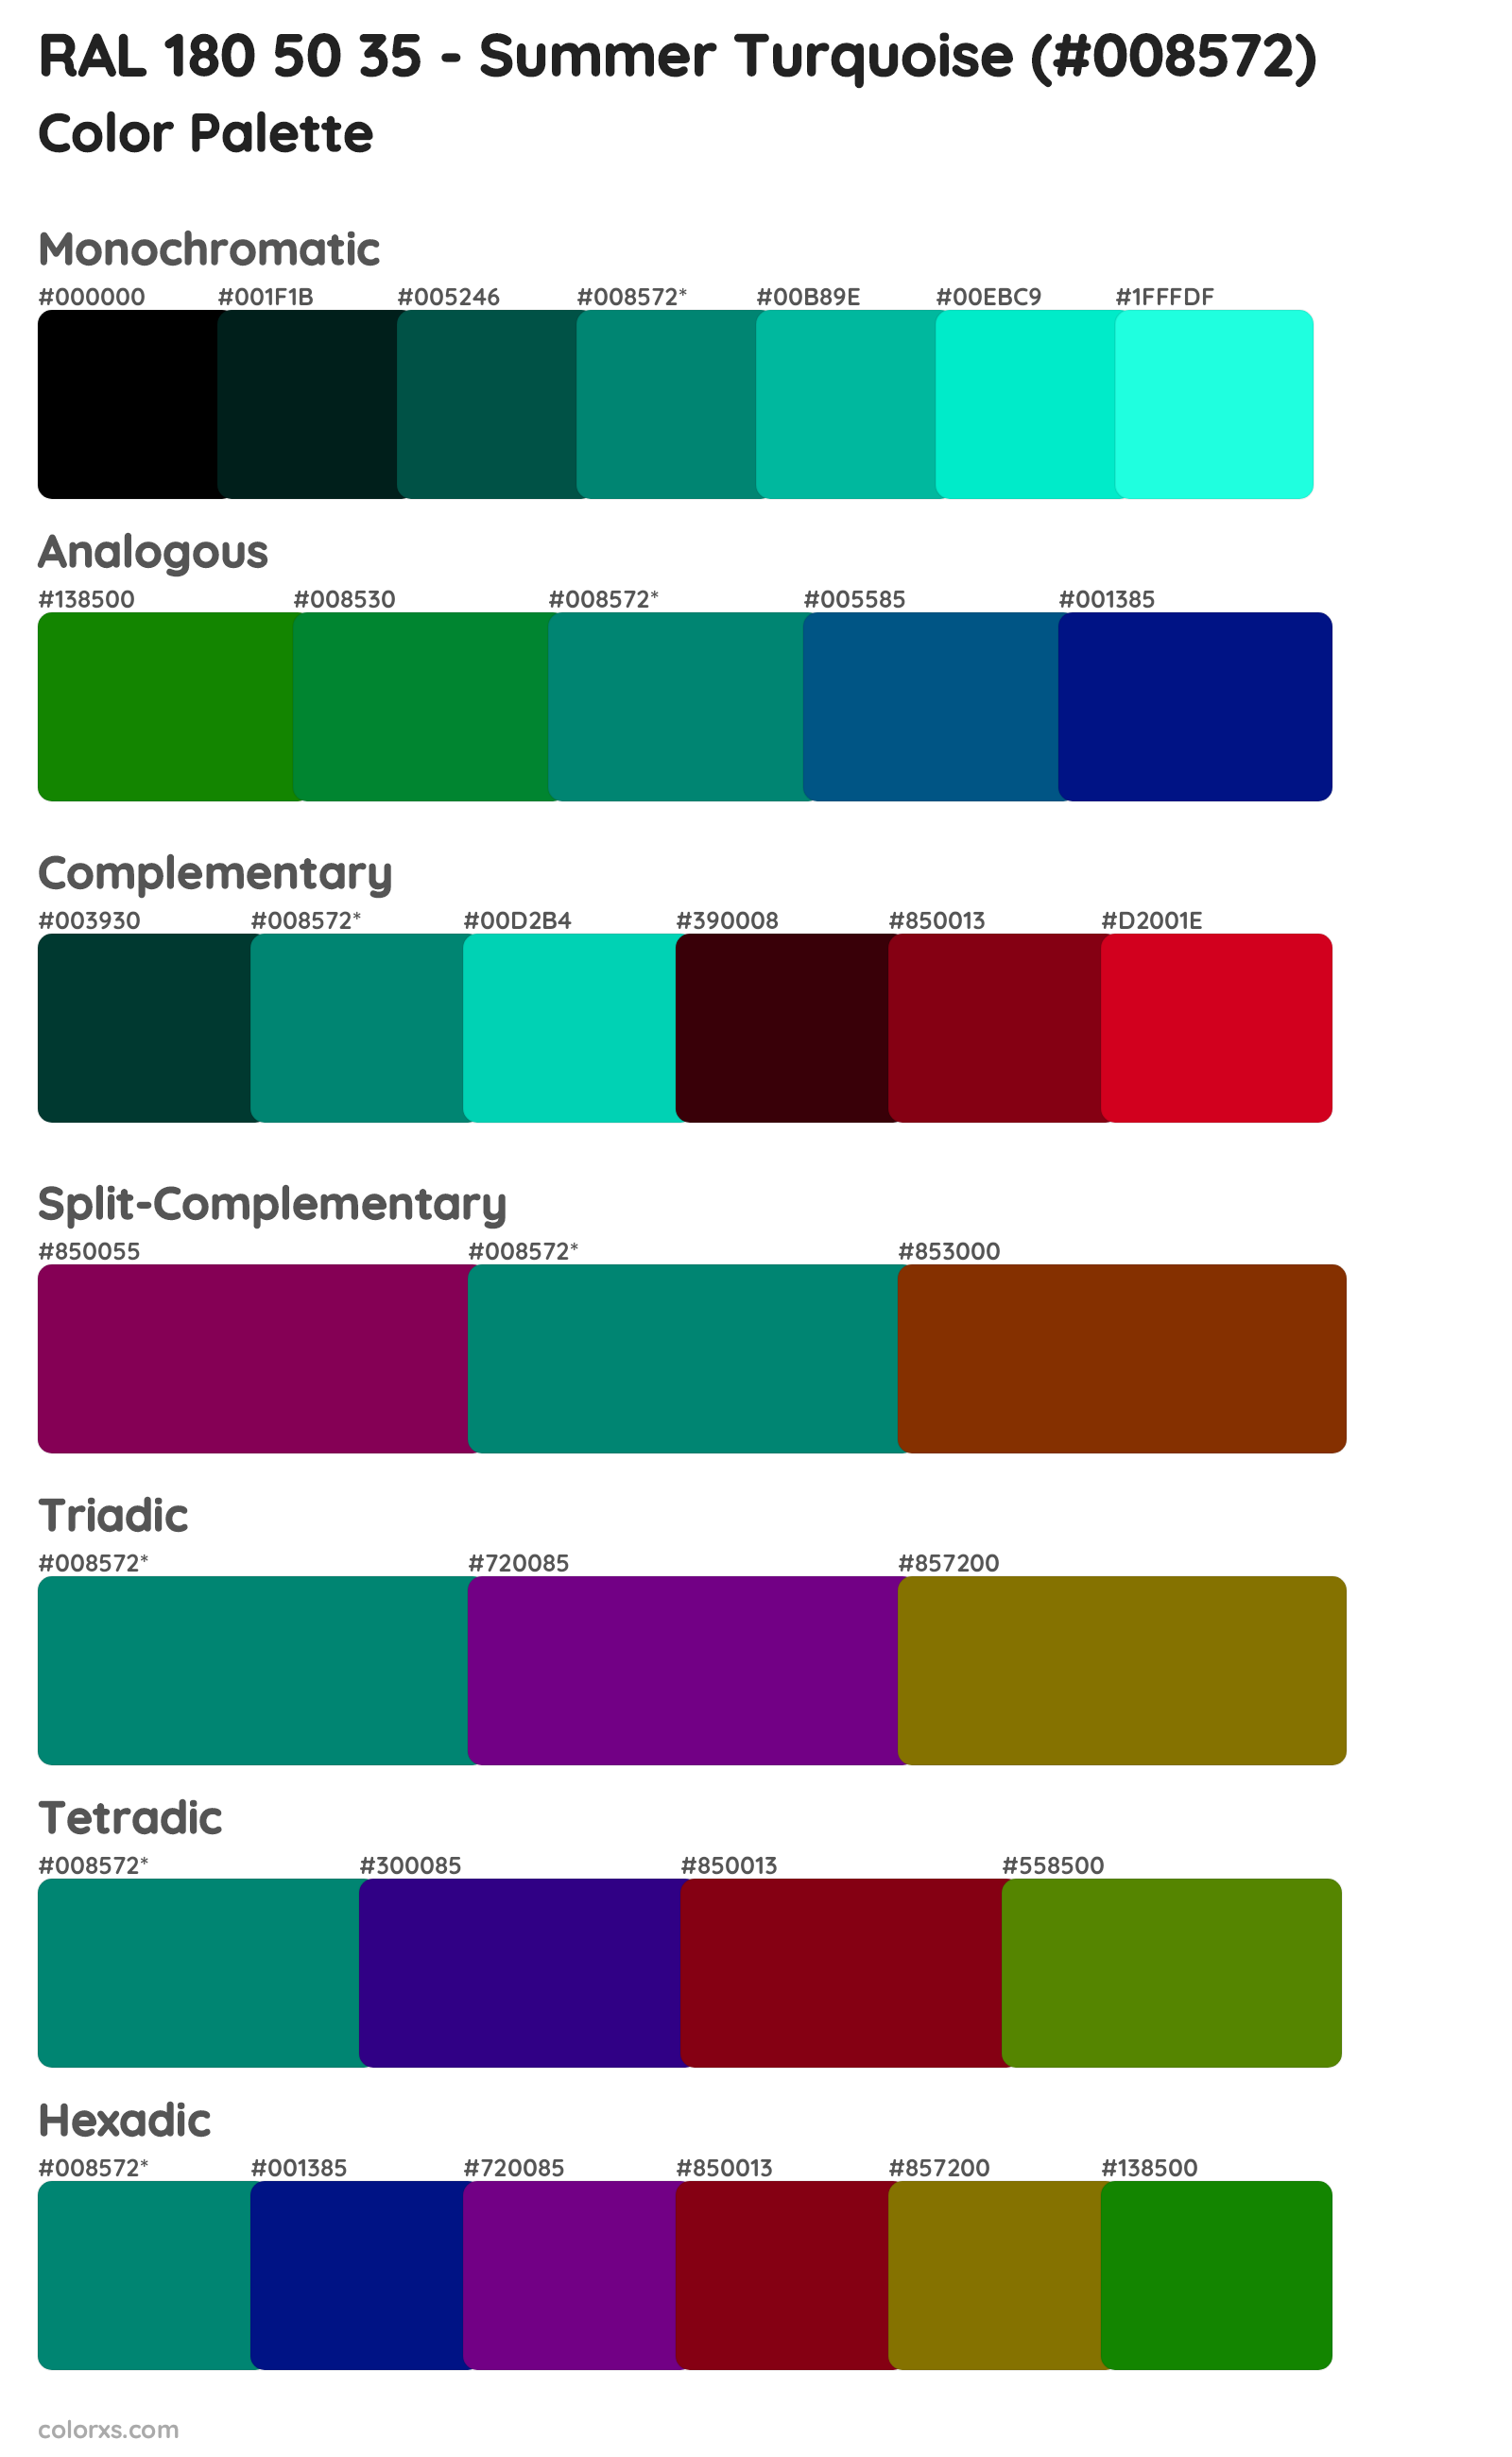 RAL 180 50 35 - Summer Turquoise Color Scheme Palettes